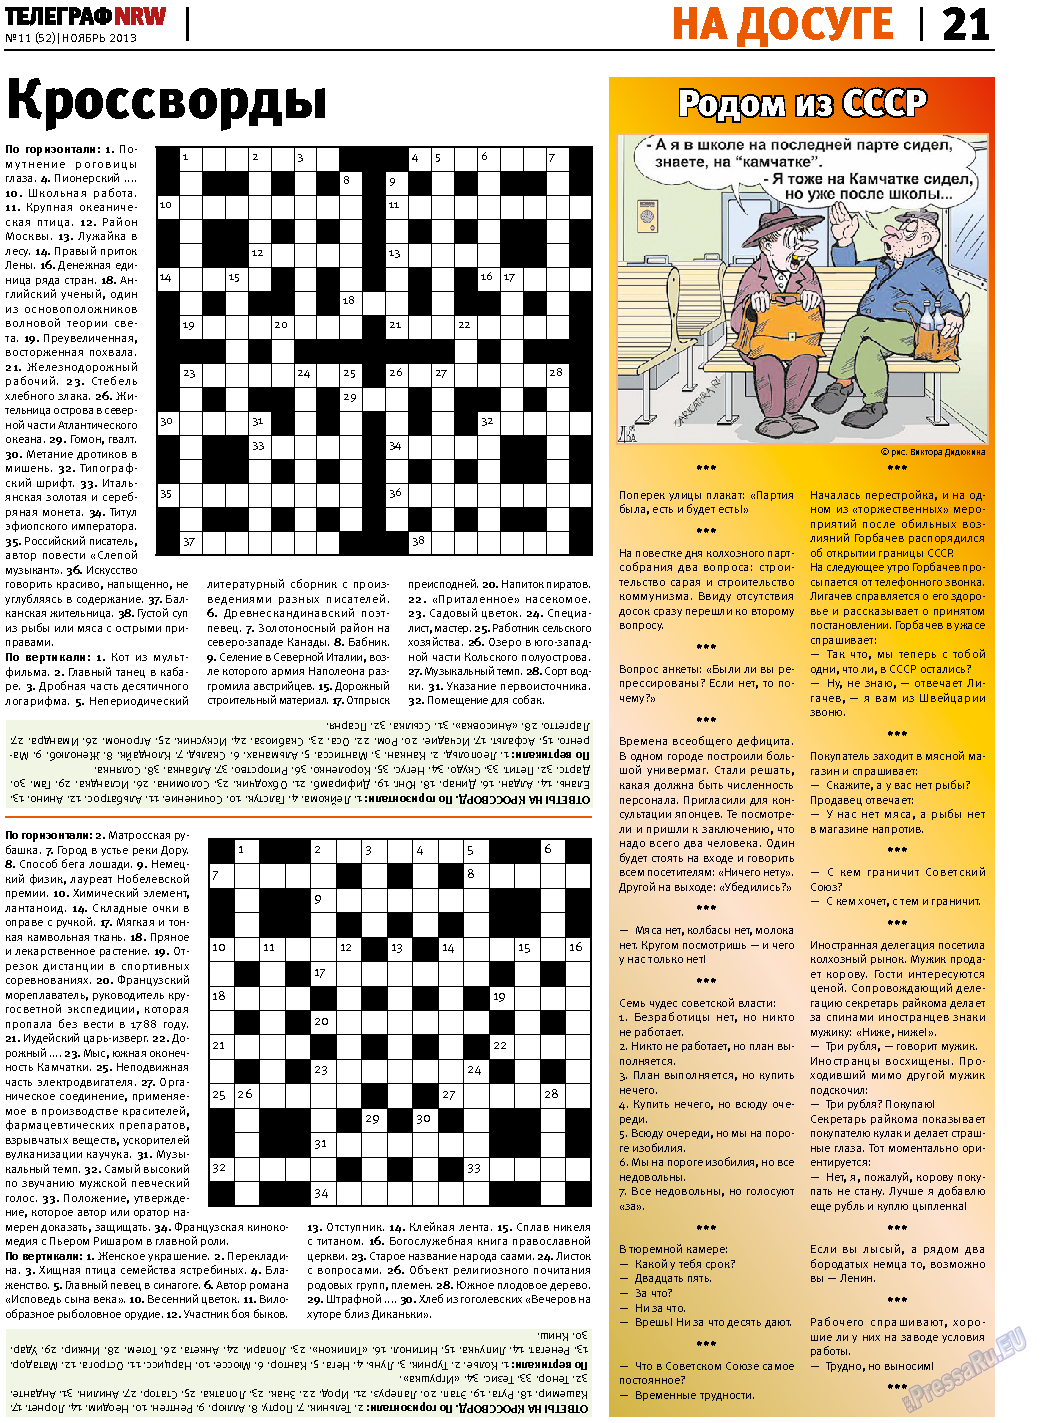 Телеграф NRW, газета. 2013 №11 стр.21